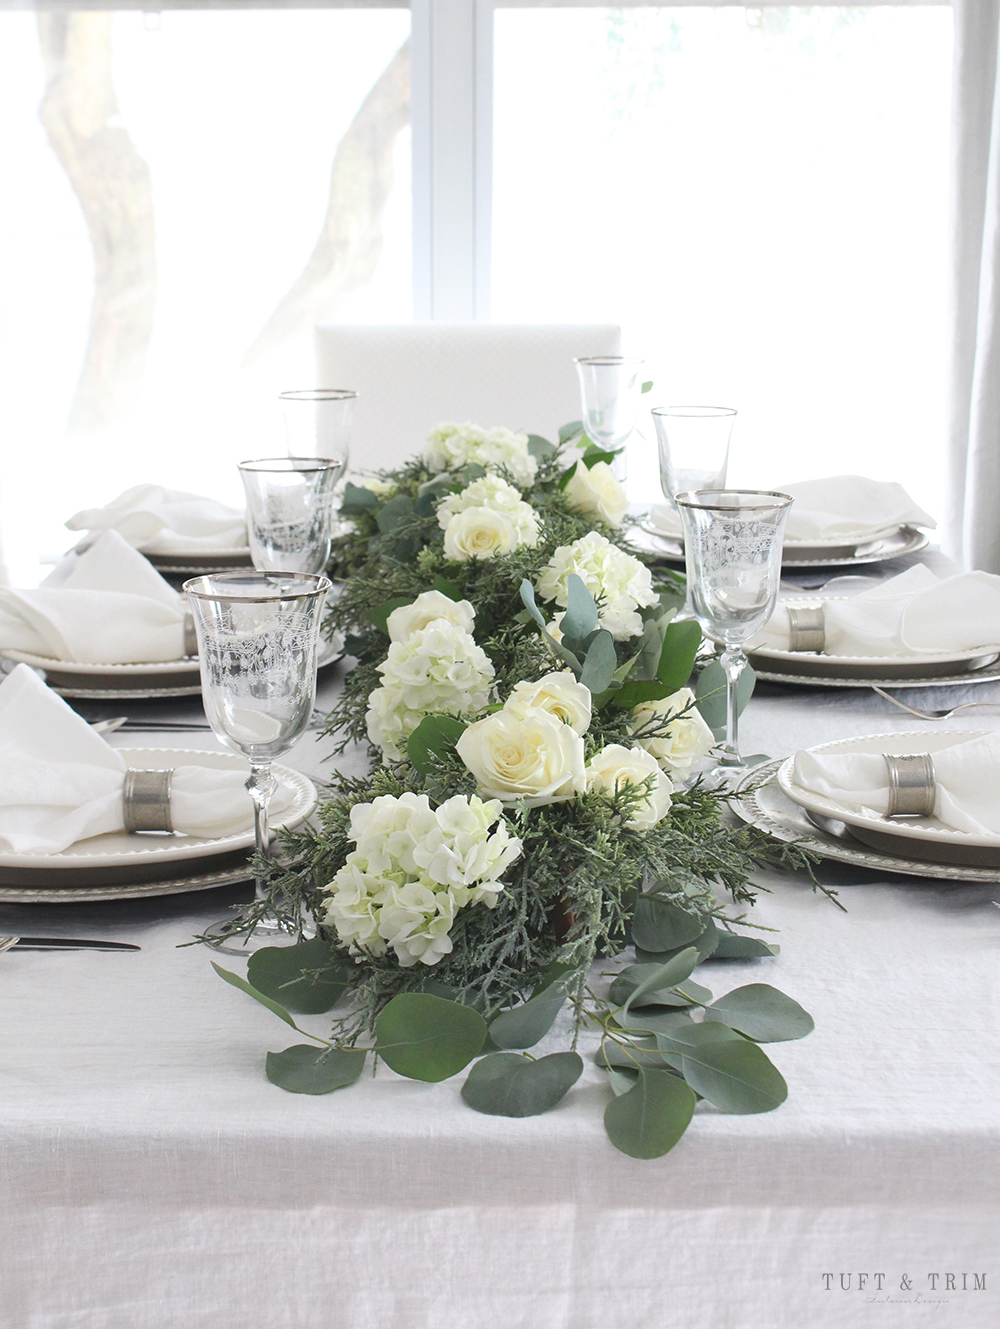 Classic & Elegant White Christmas Tablescape - Tuft & Trim